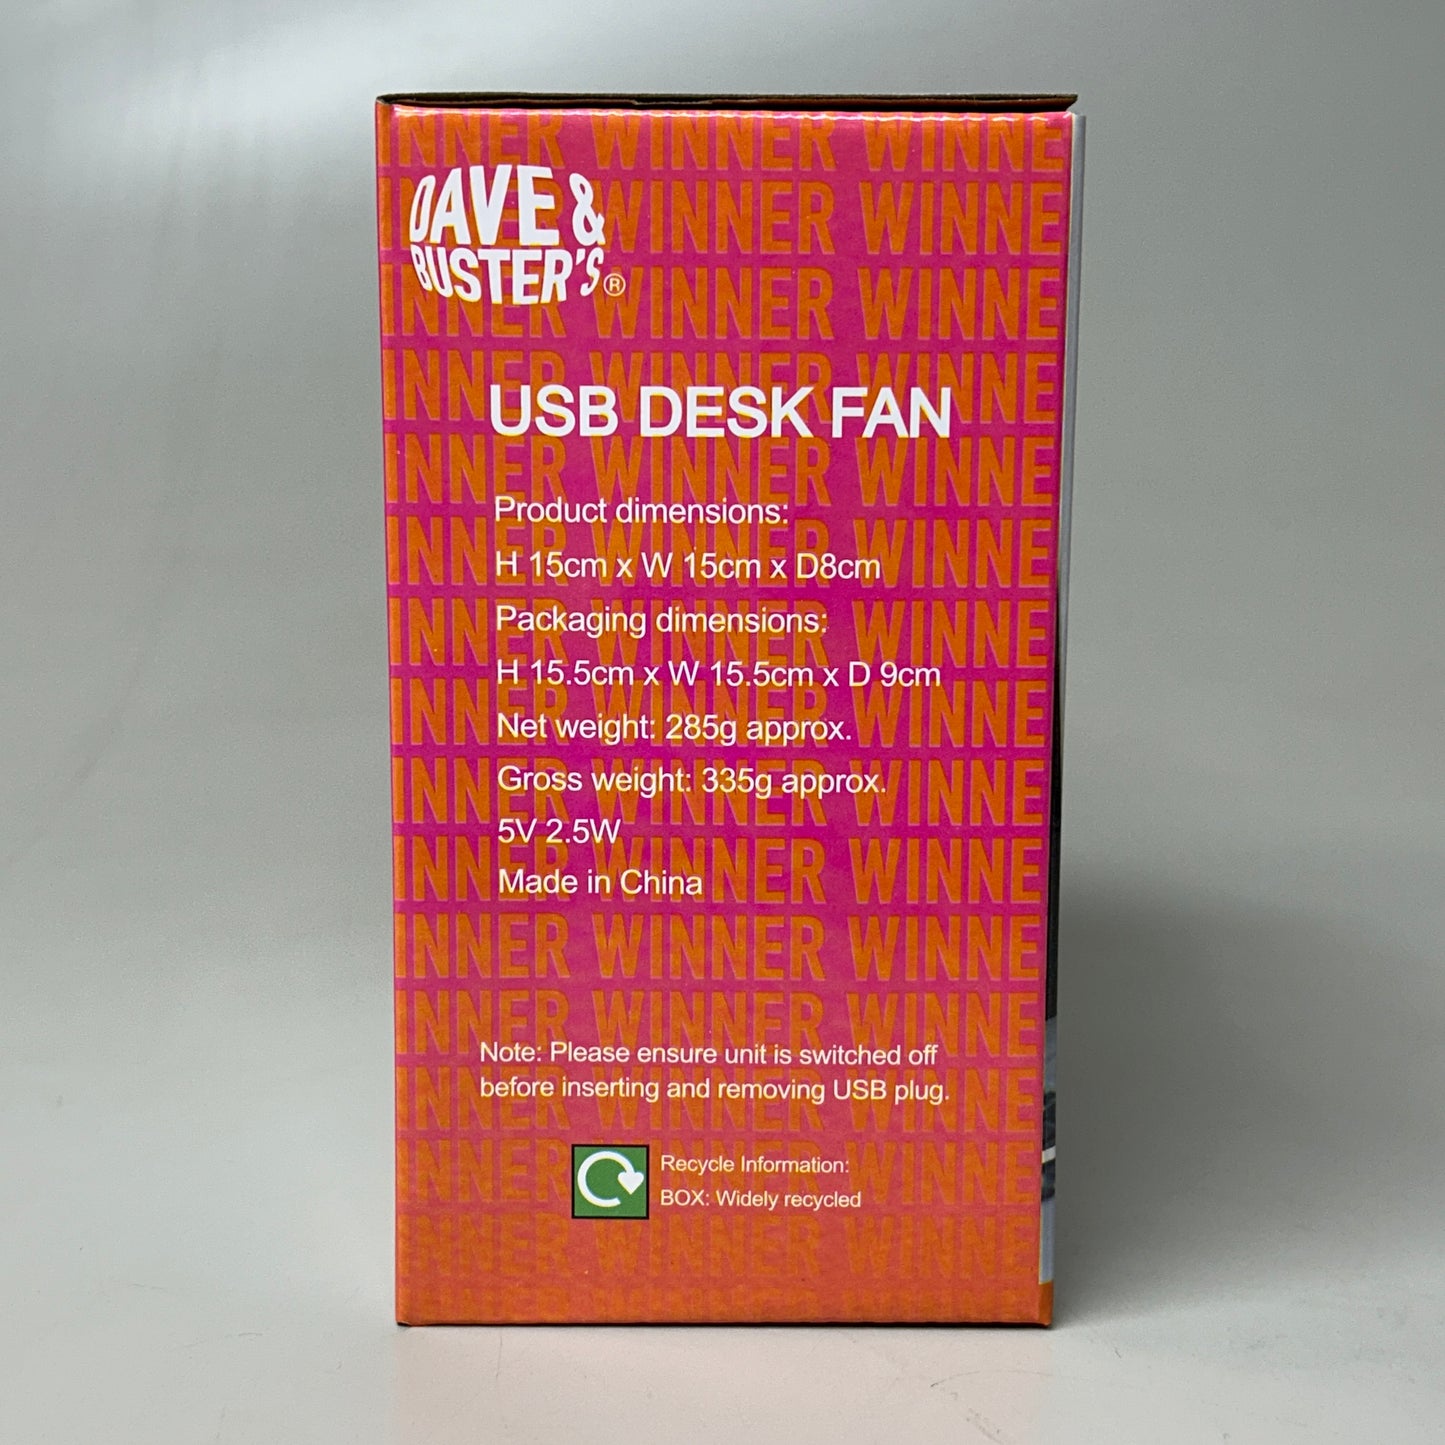 DAVE & BUSTER'S USB Mini Desk Fan 19643 (New)